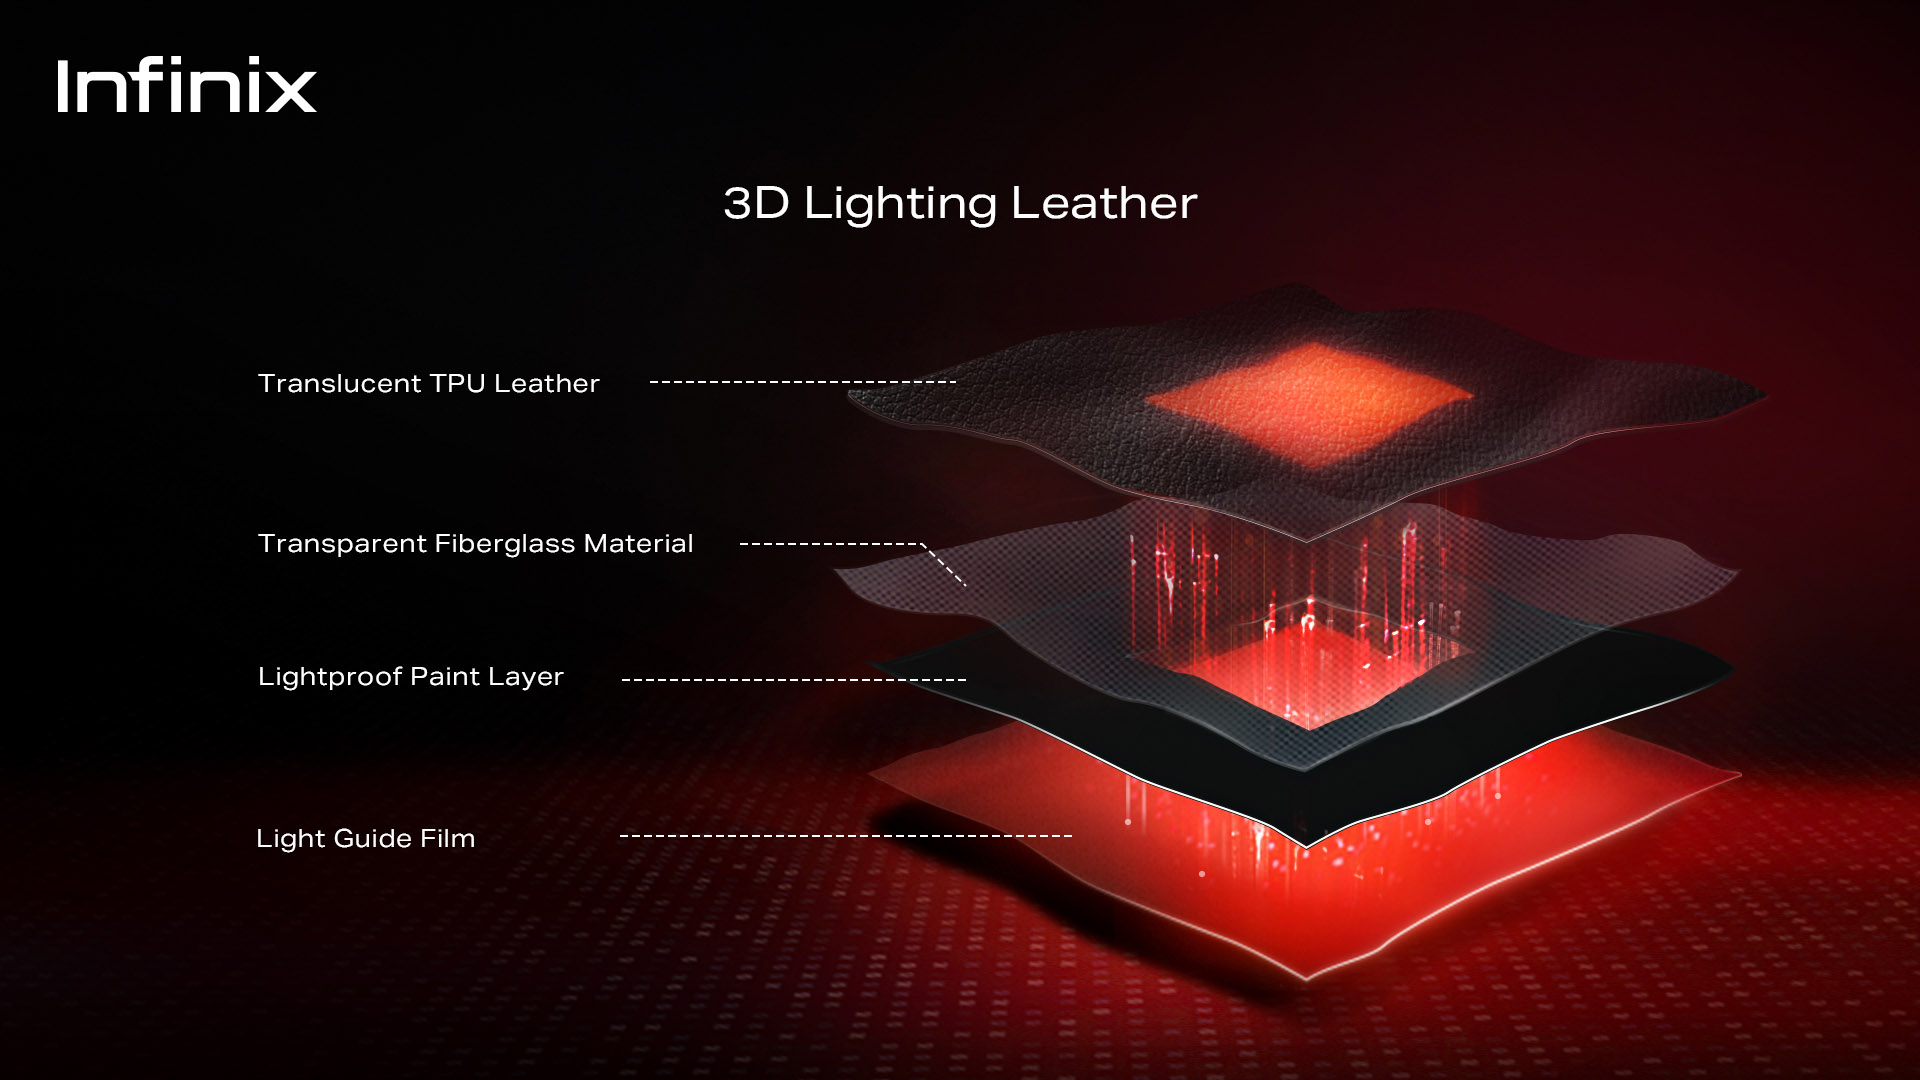 Infinix представляет технологию 3D Lighting Leather